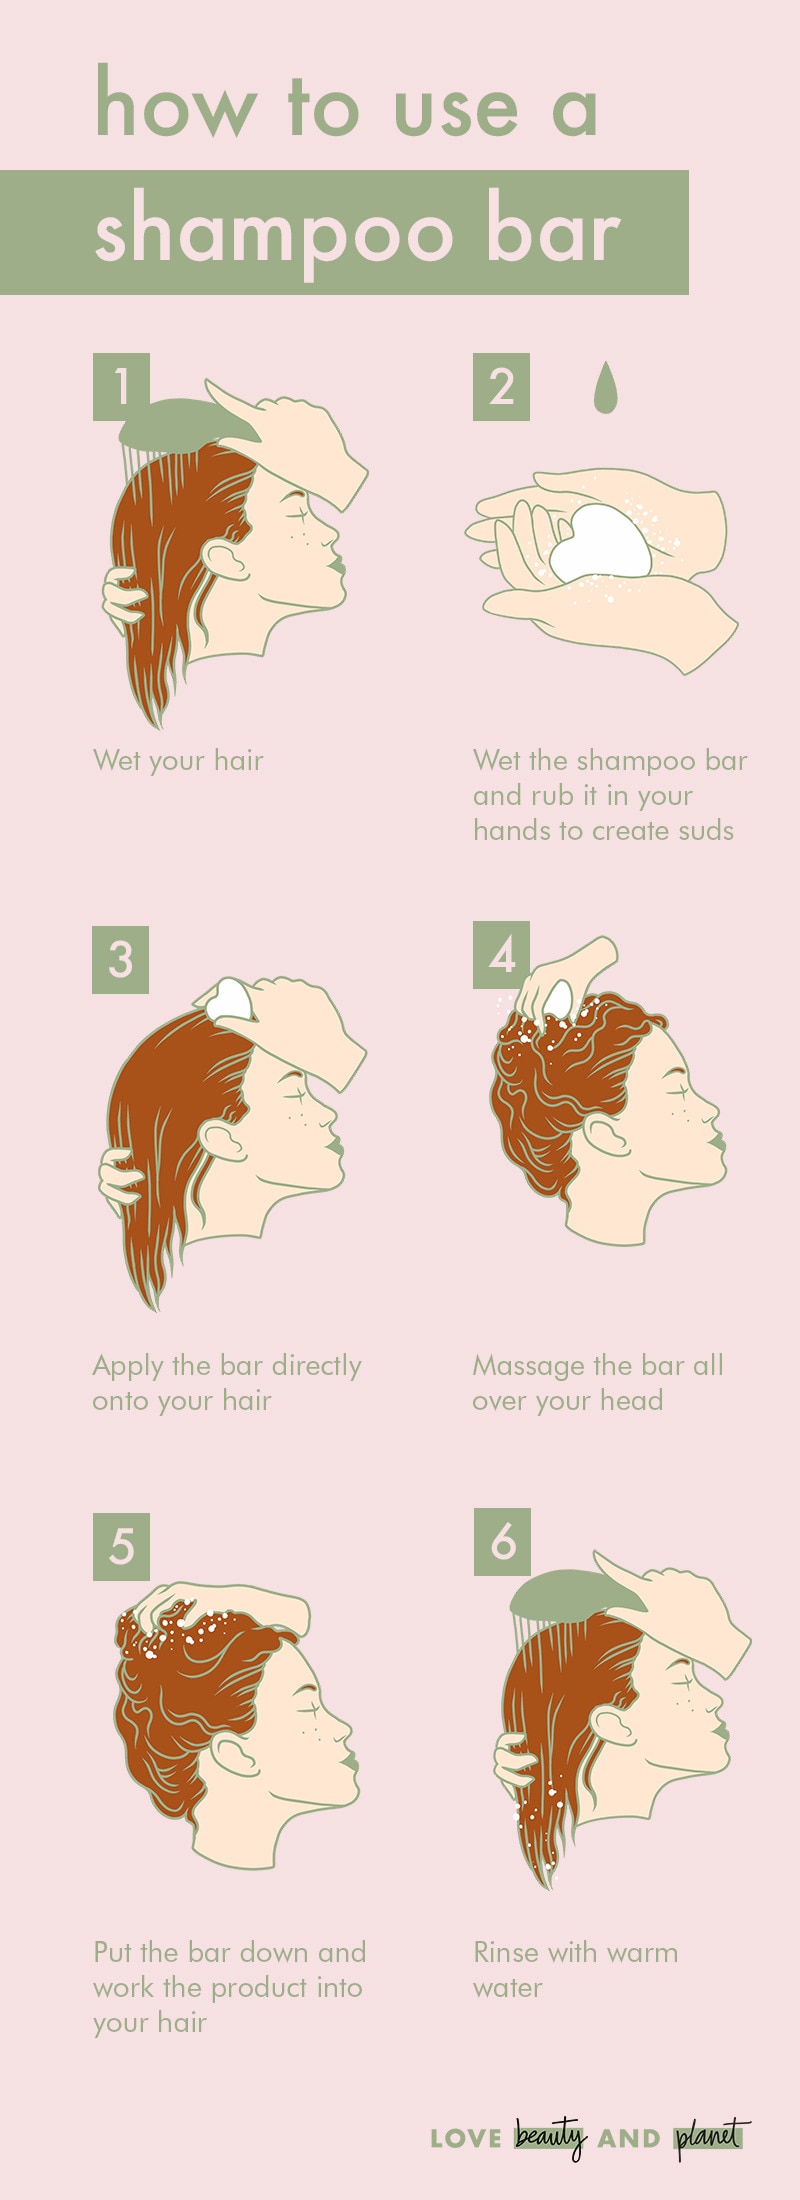 how to use a shampoo bar infographic